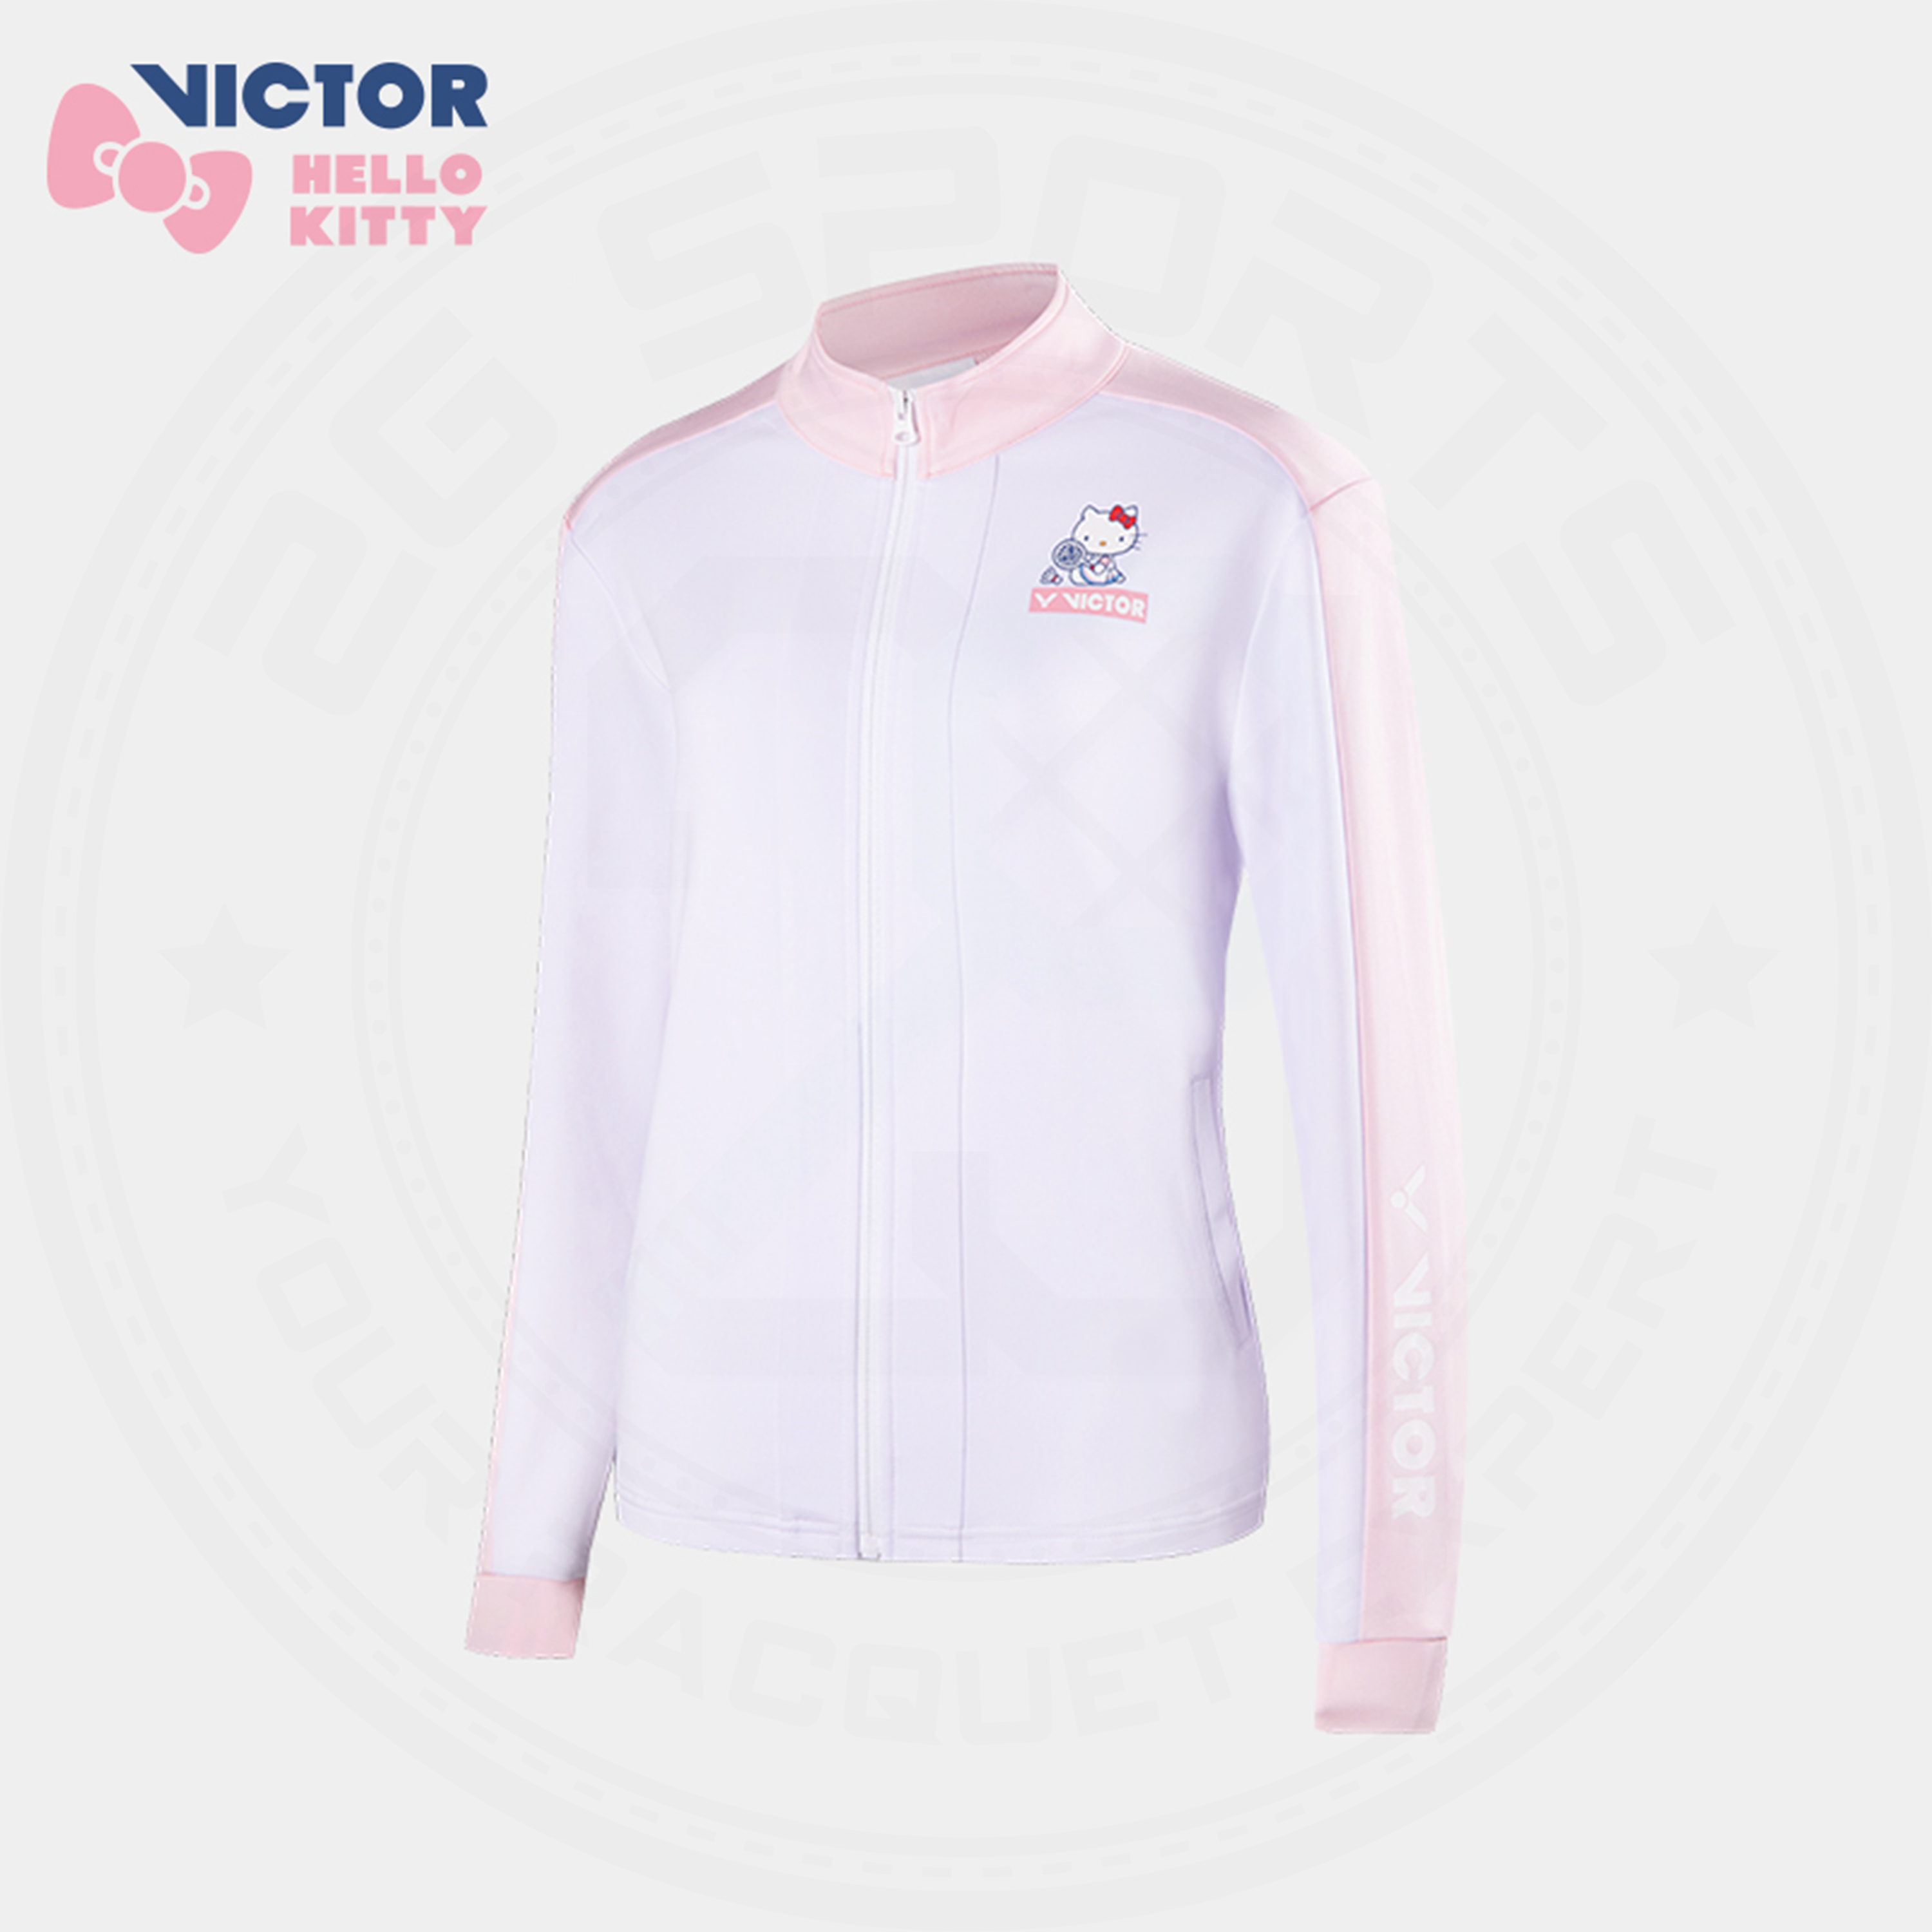 Victor X Hello Kitty J-KT206 Jacket WOMEN'S